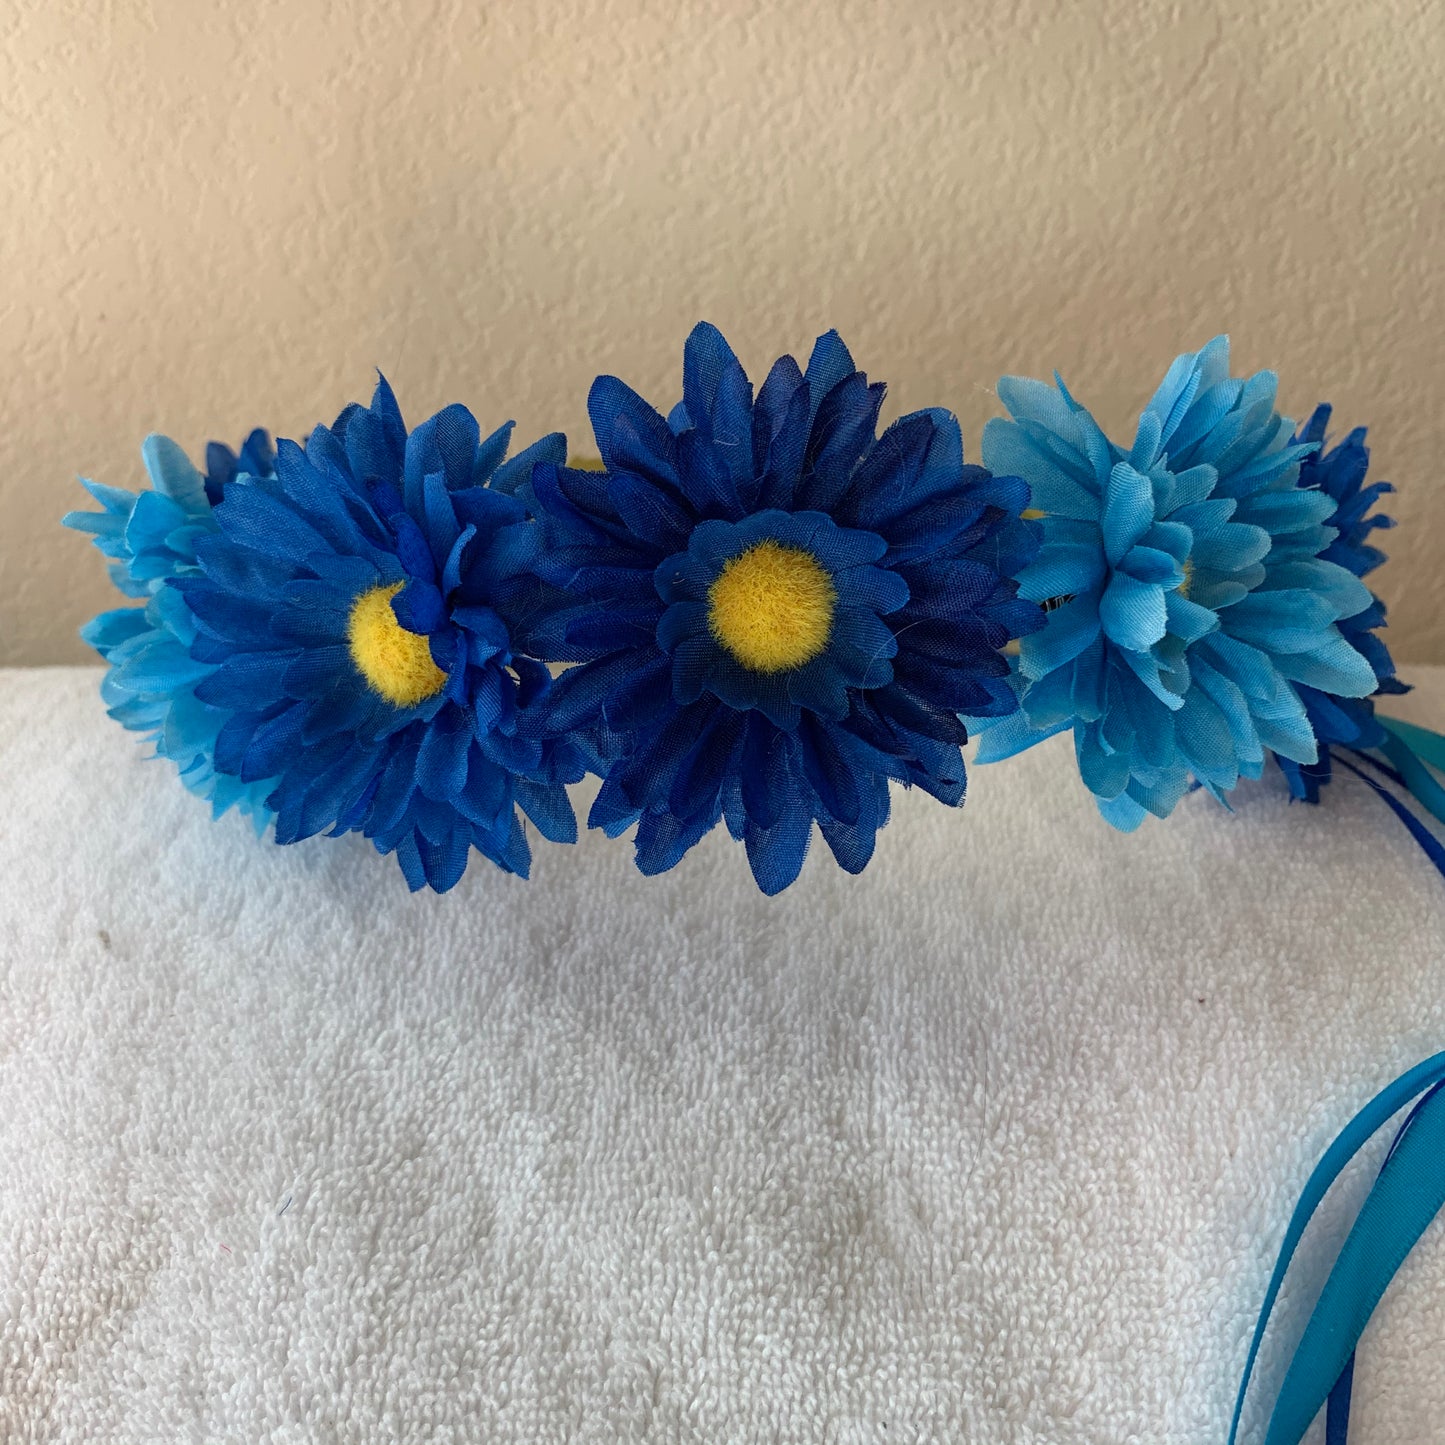 Medium Wreath Lighted - Light Blue and Dark Daisies